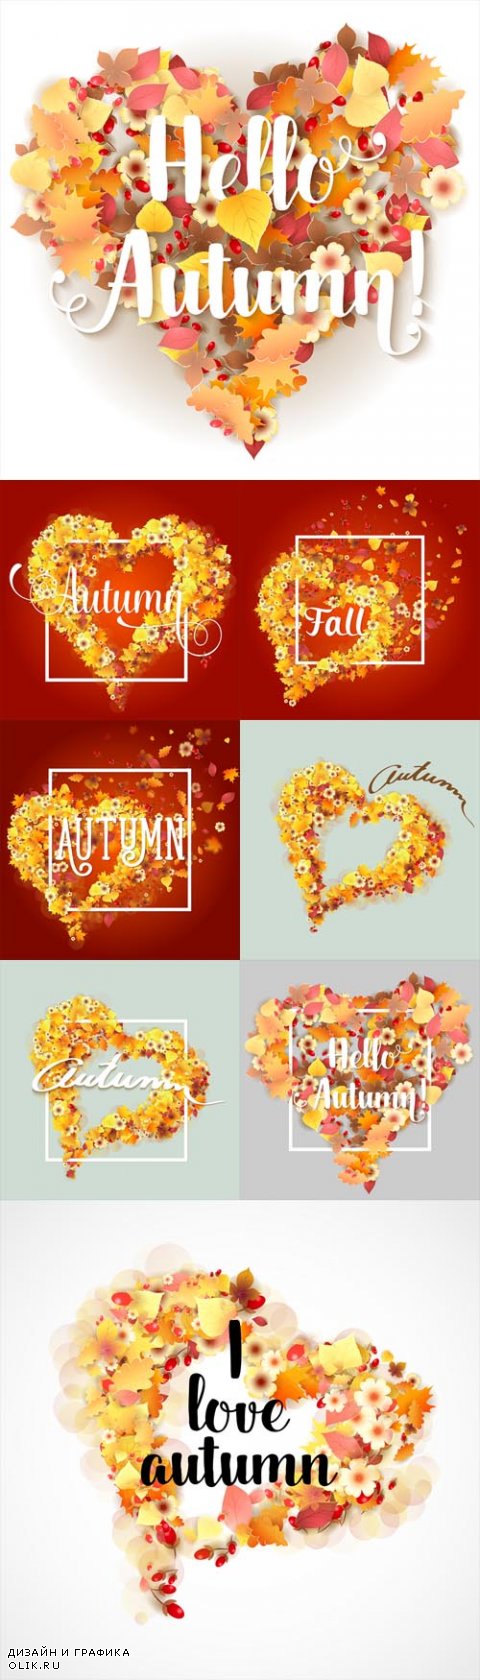 Vecto Autumn Frames in Shape of Heart